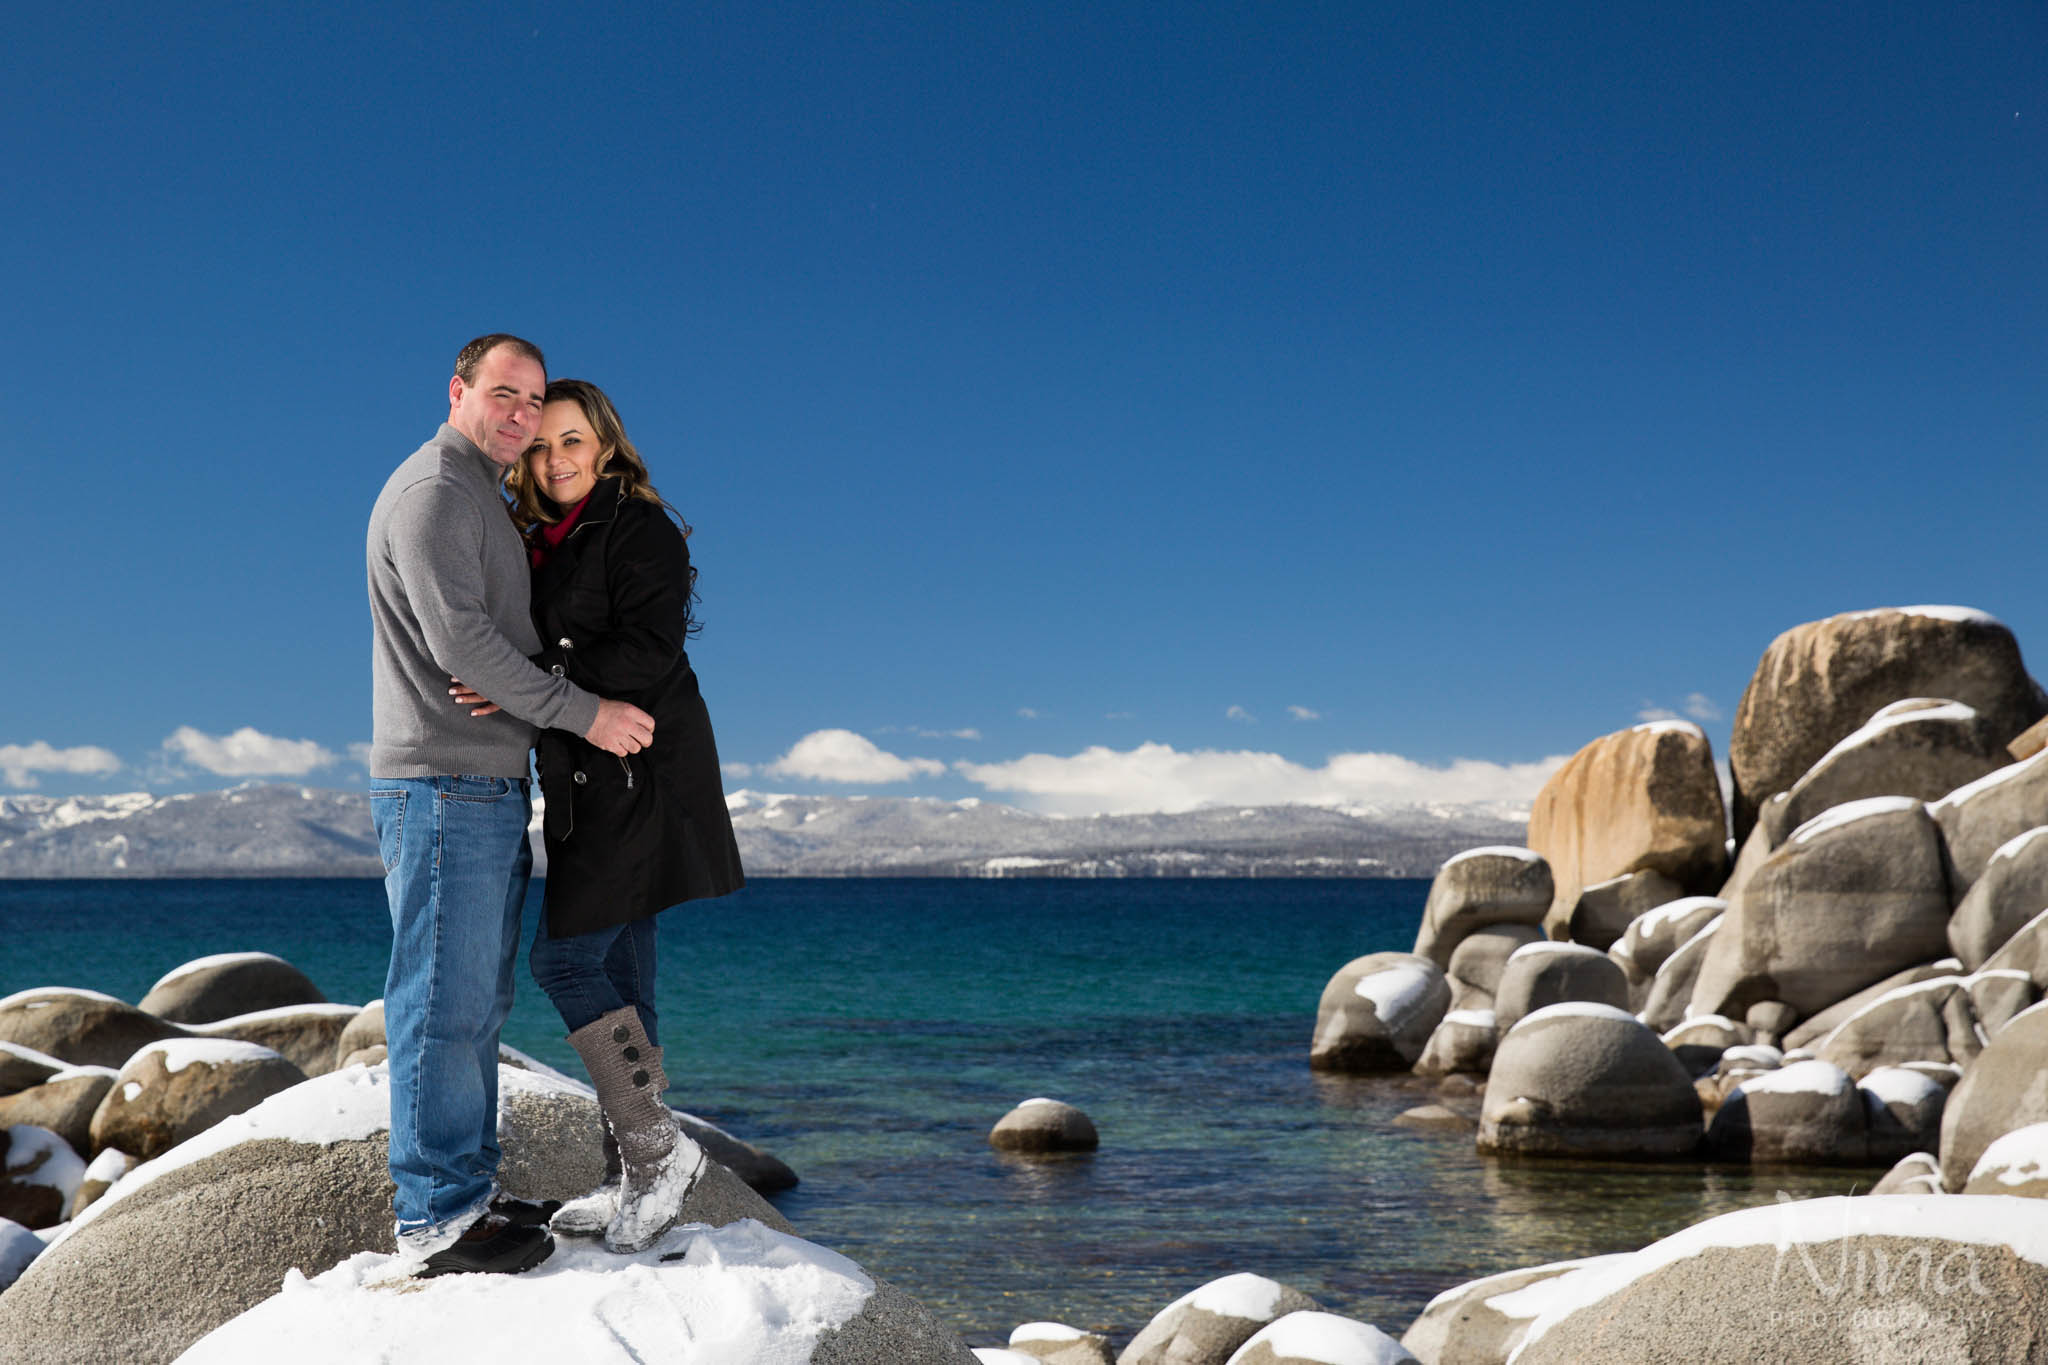 beach couple portrait on rocks, blue lake, blue sky, mountains